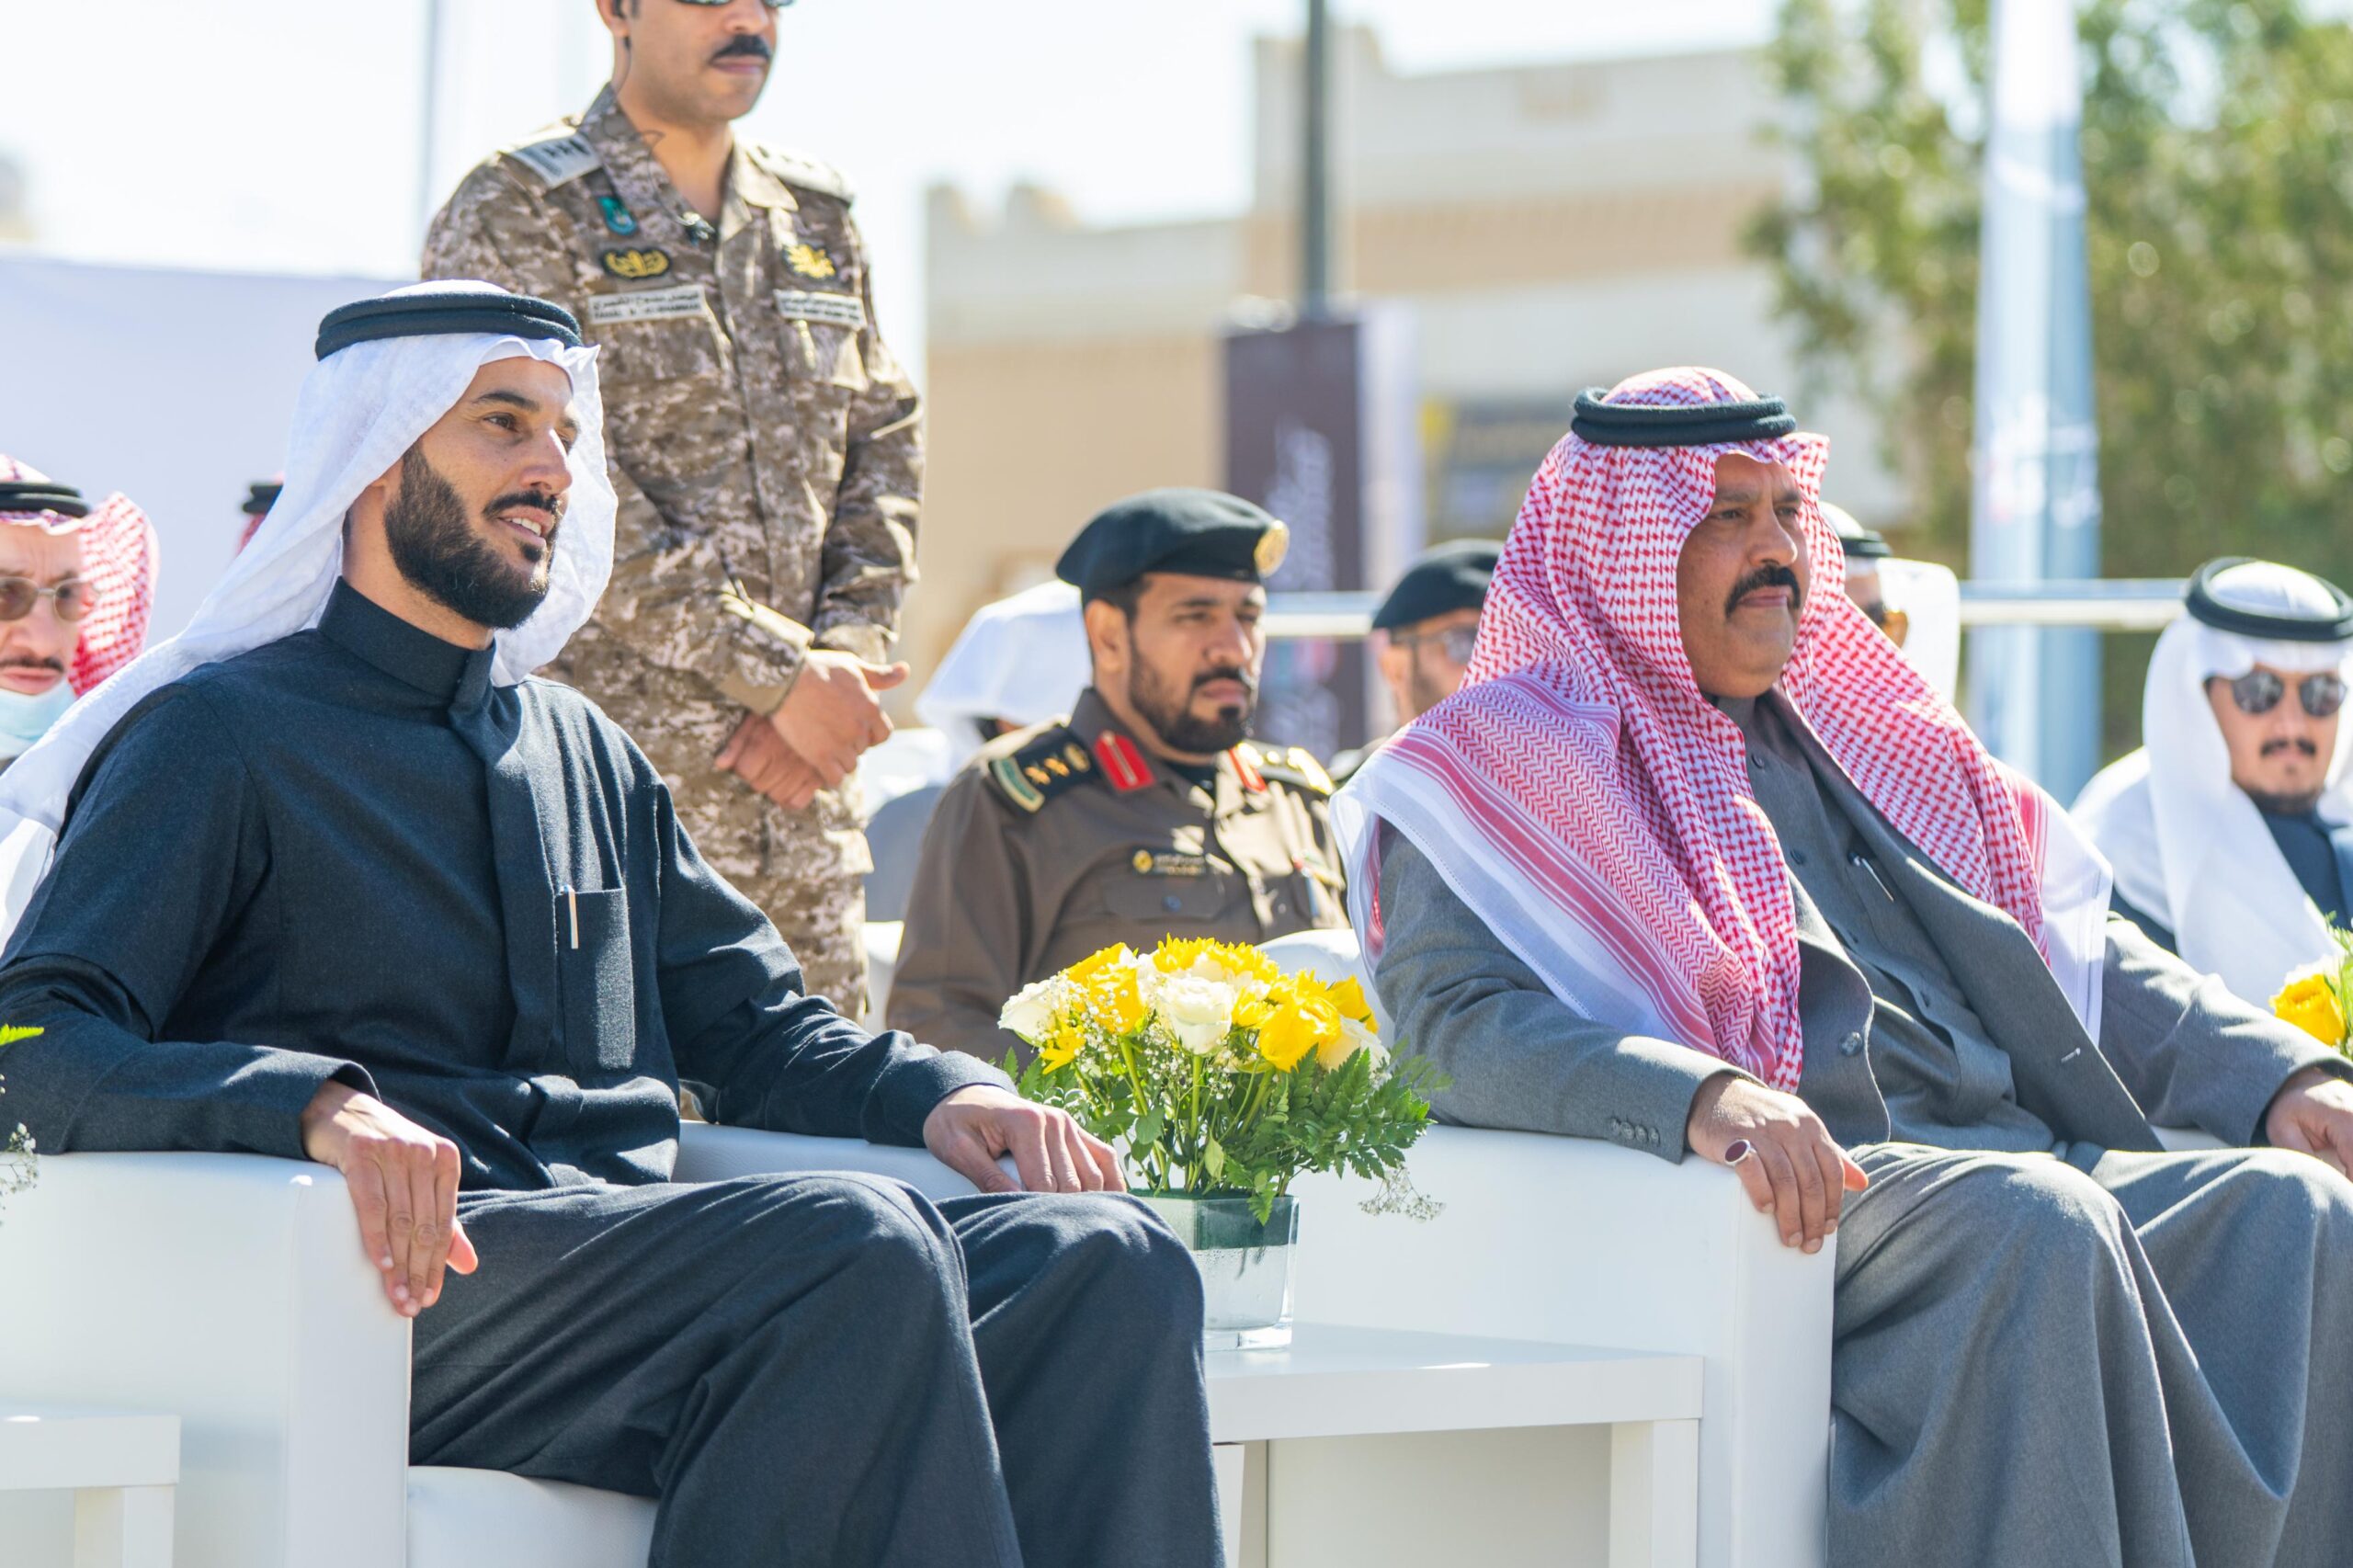 His Royal Highness Prince Abdulaziz bin Saad bin Abdulaziz, Prince of Hail